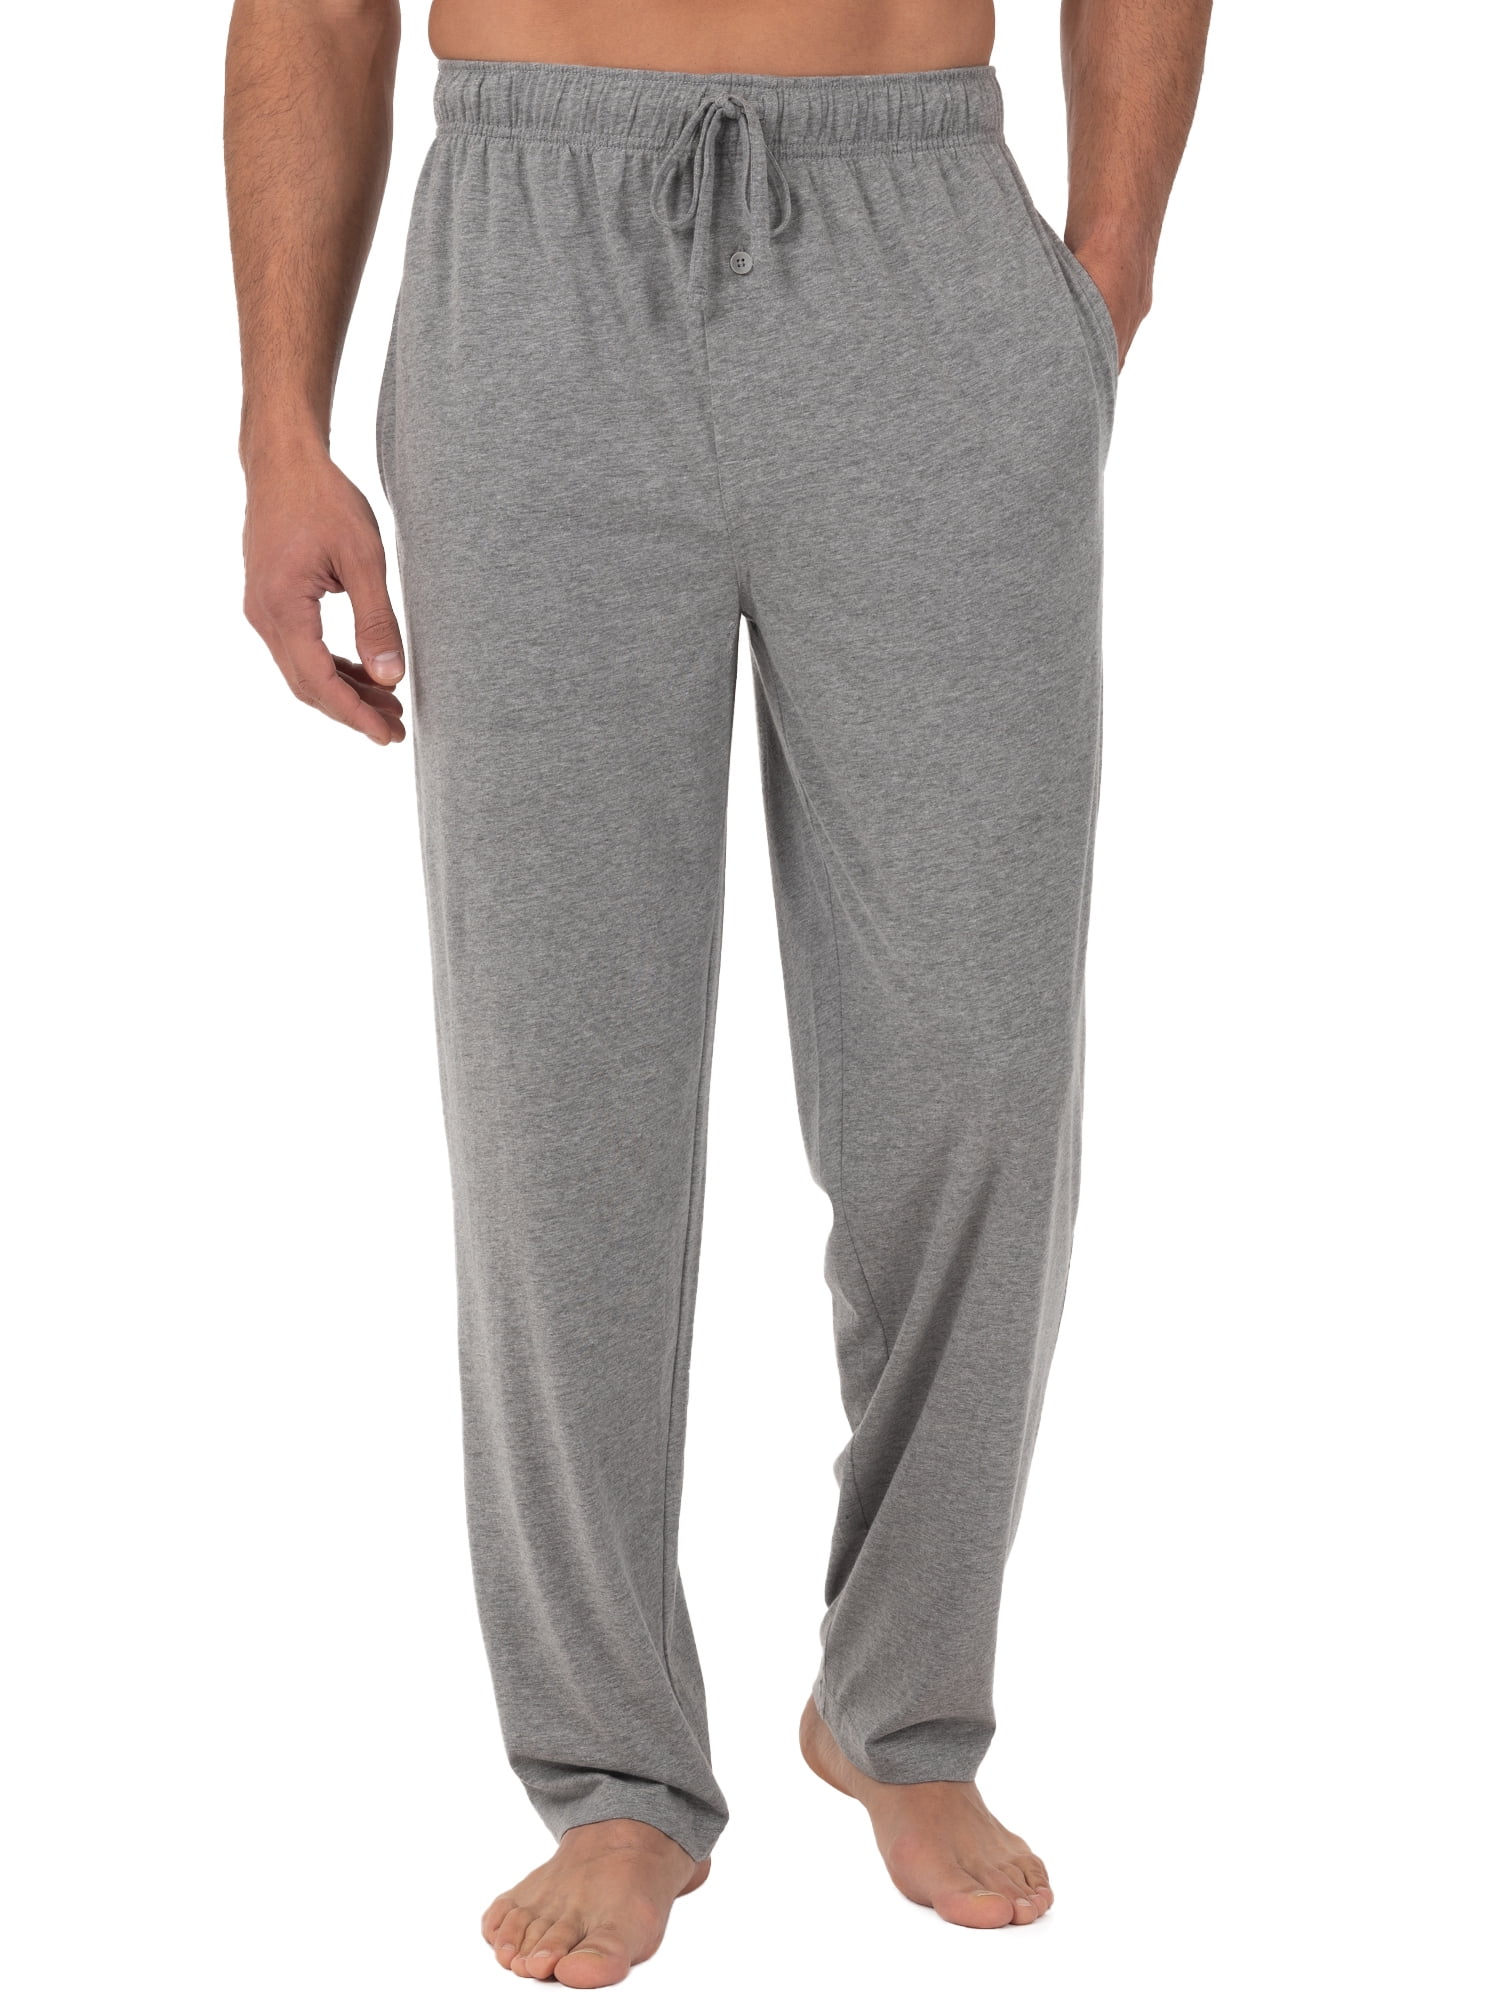 XQS Mens Cotton Pants Jersey Knit Lounge Sleep Pajama Pants 